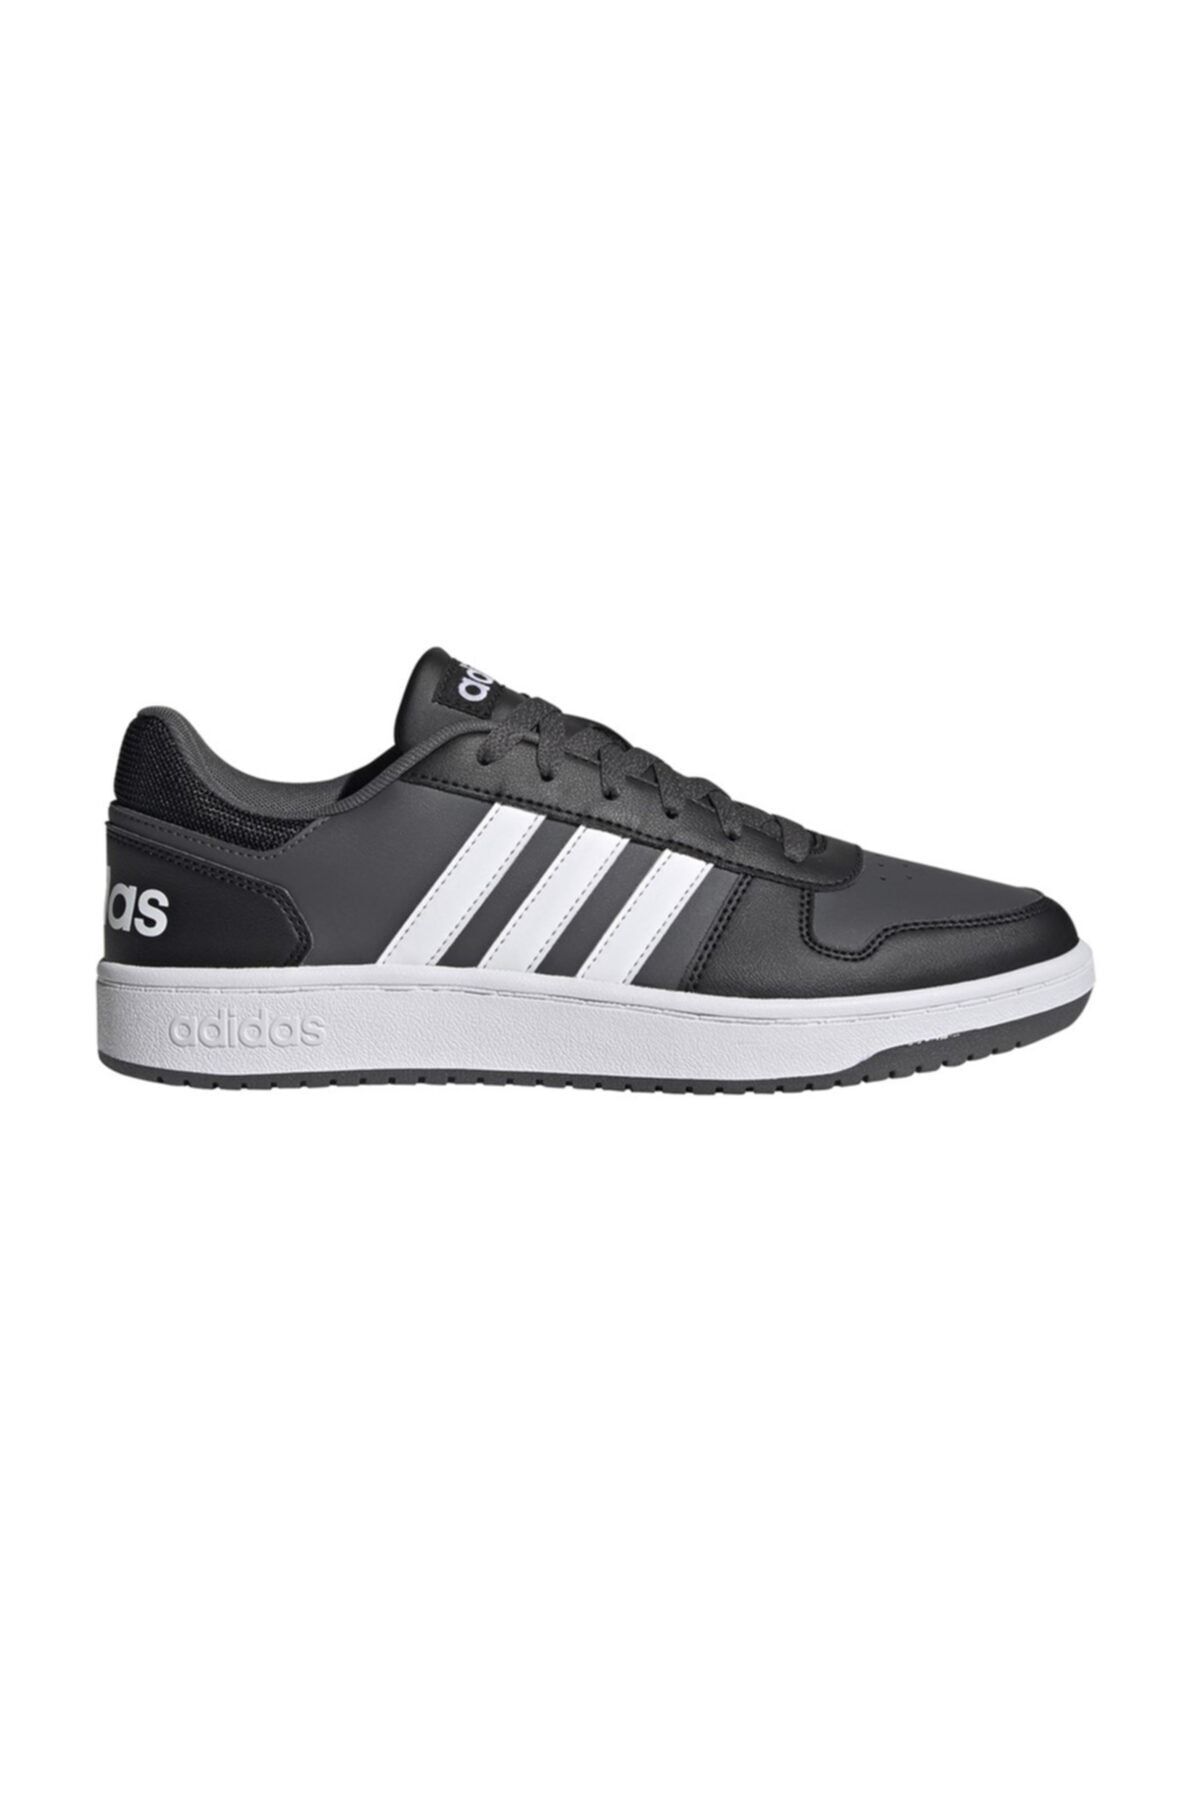 adidas Fy8626-e Hoops 2.0 Erkek Spor Ayakkabı Siyah